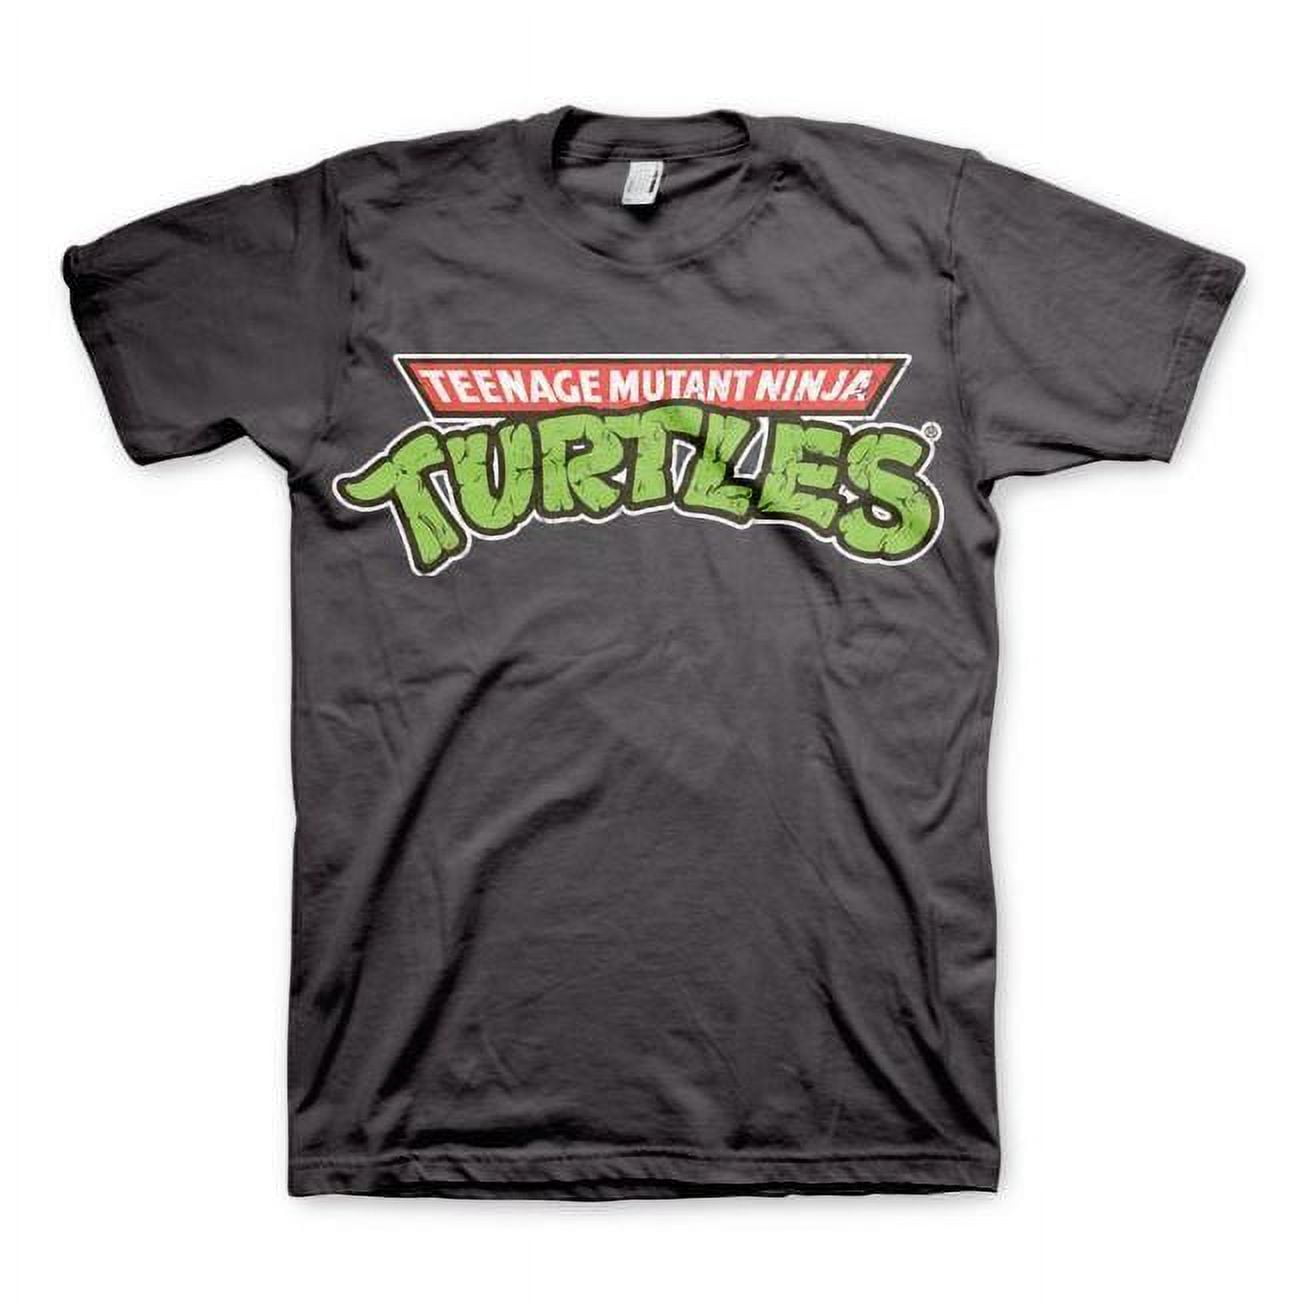 (Black) Teenage Mutant Ninja Turtle Classic T-Shirt